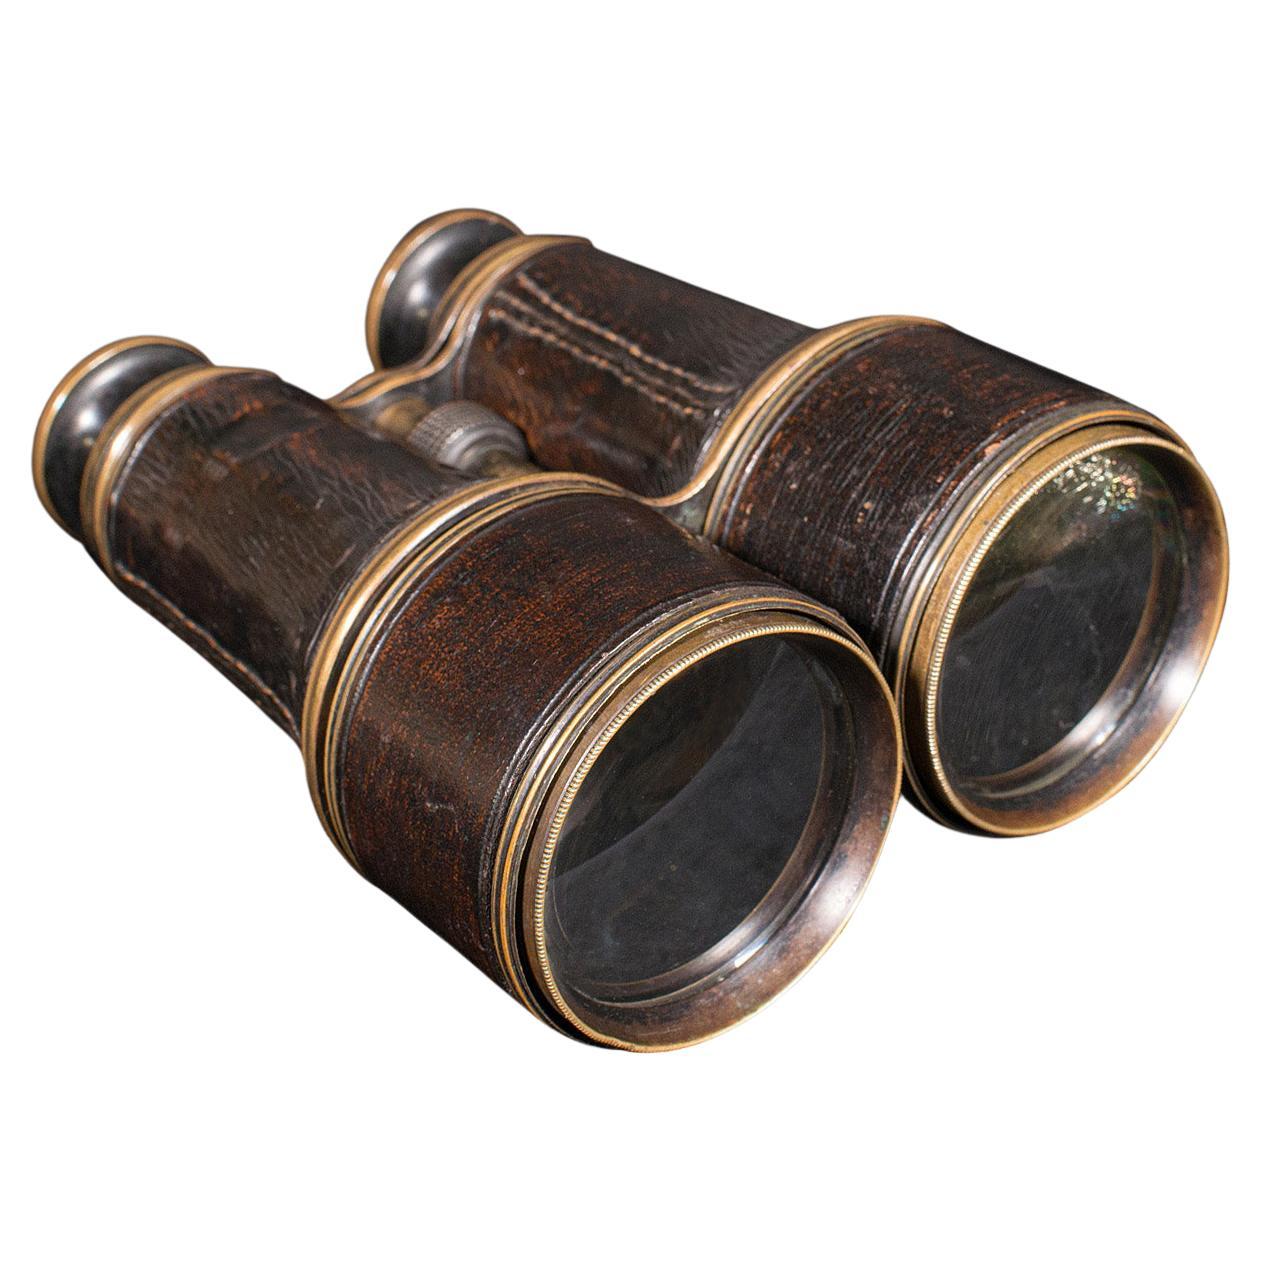 Pair of Antique Binoculars, English, Brass, Leather, Optical Instrument, c.1920